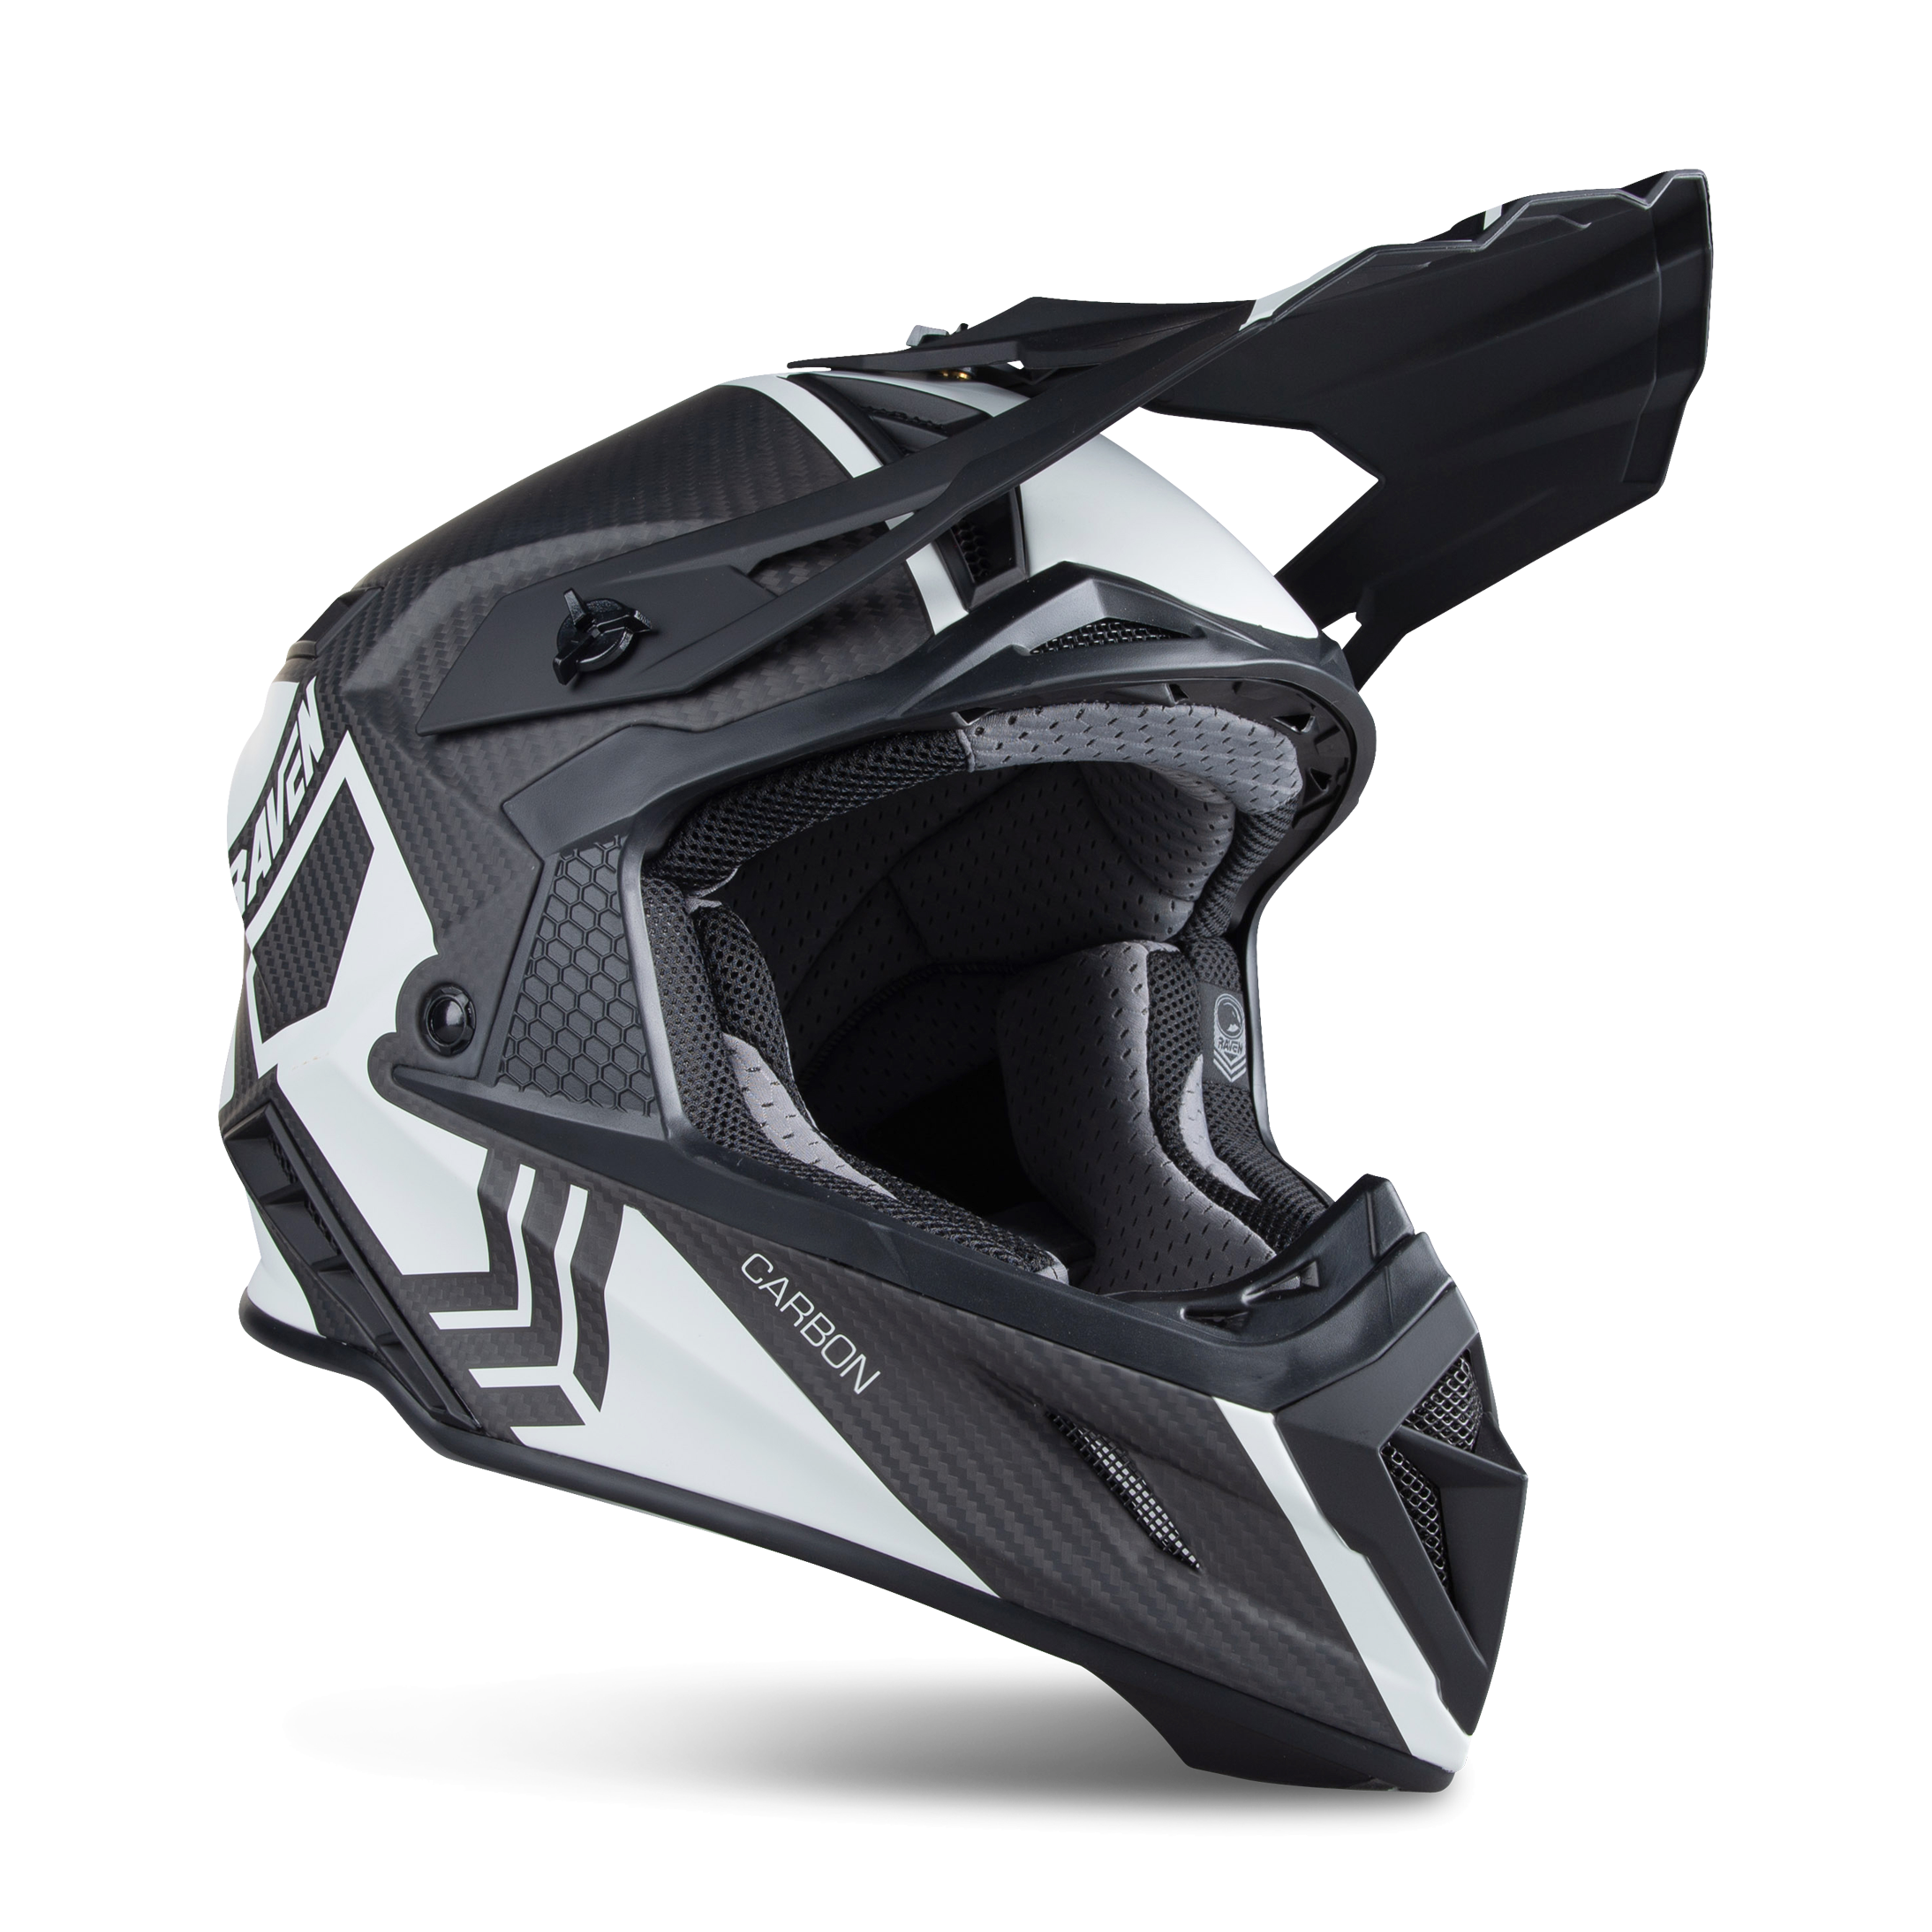 carbon fiber motocross helmet